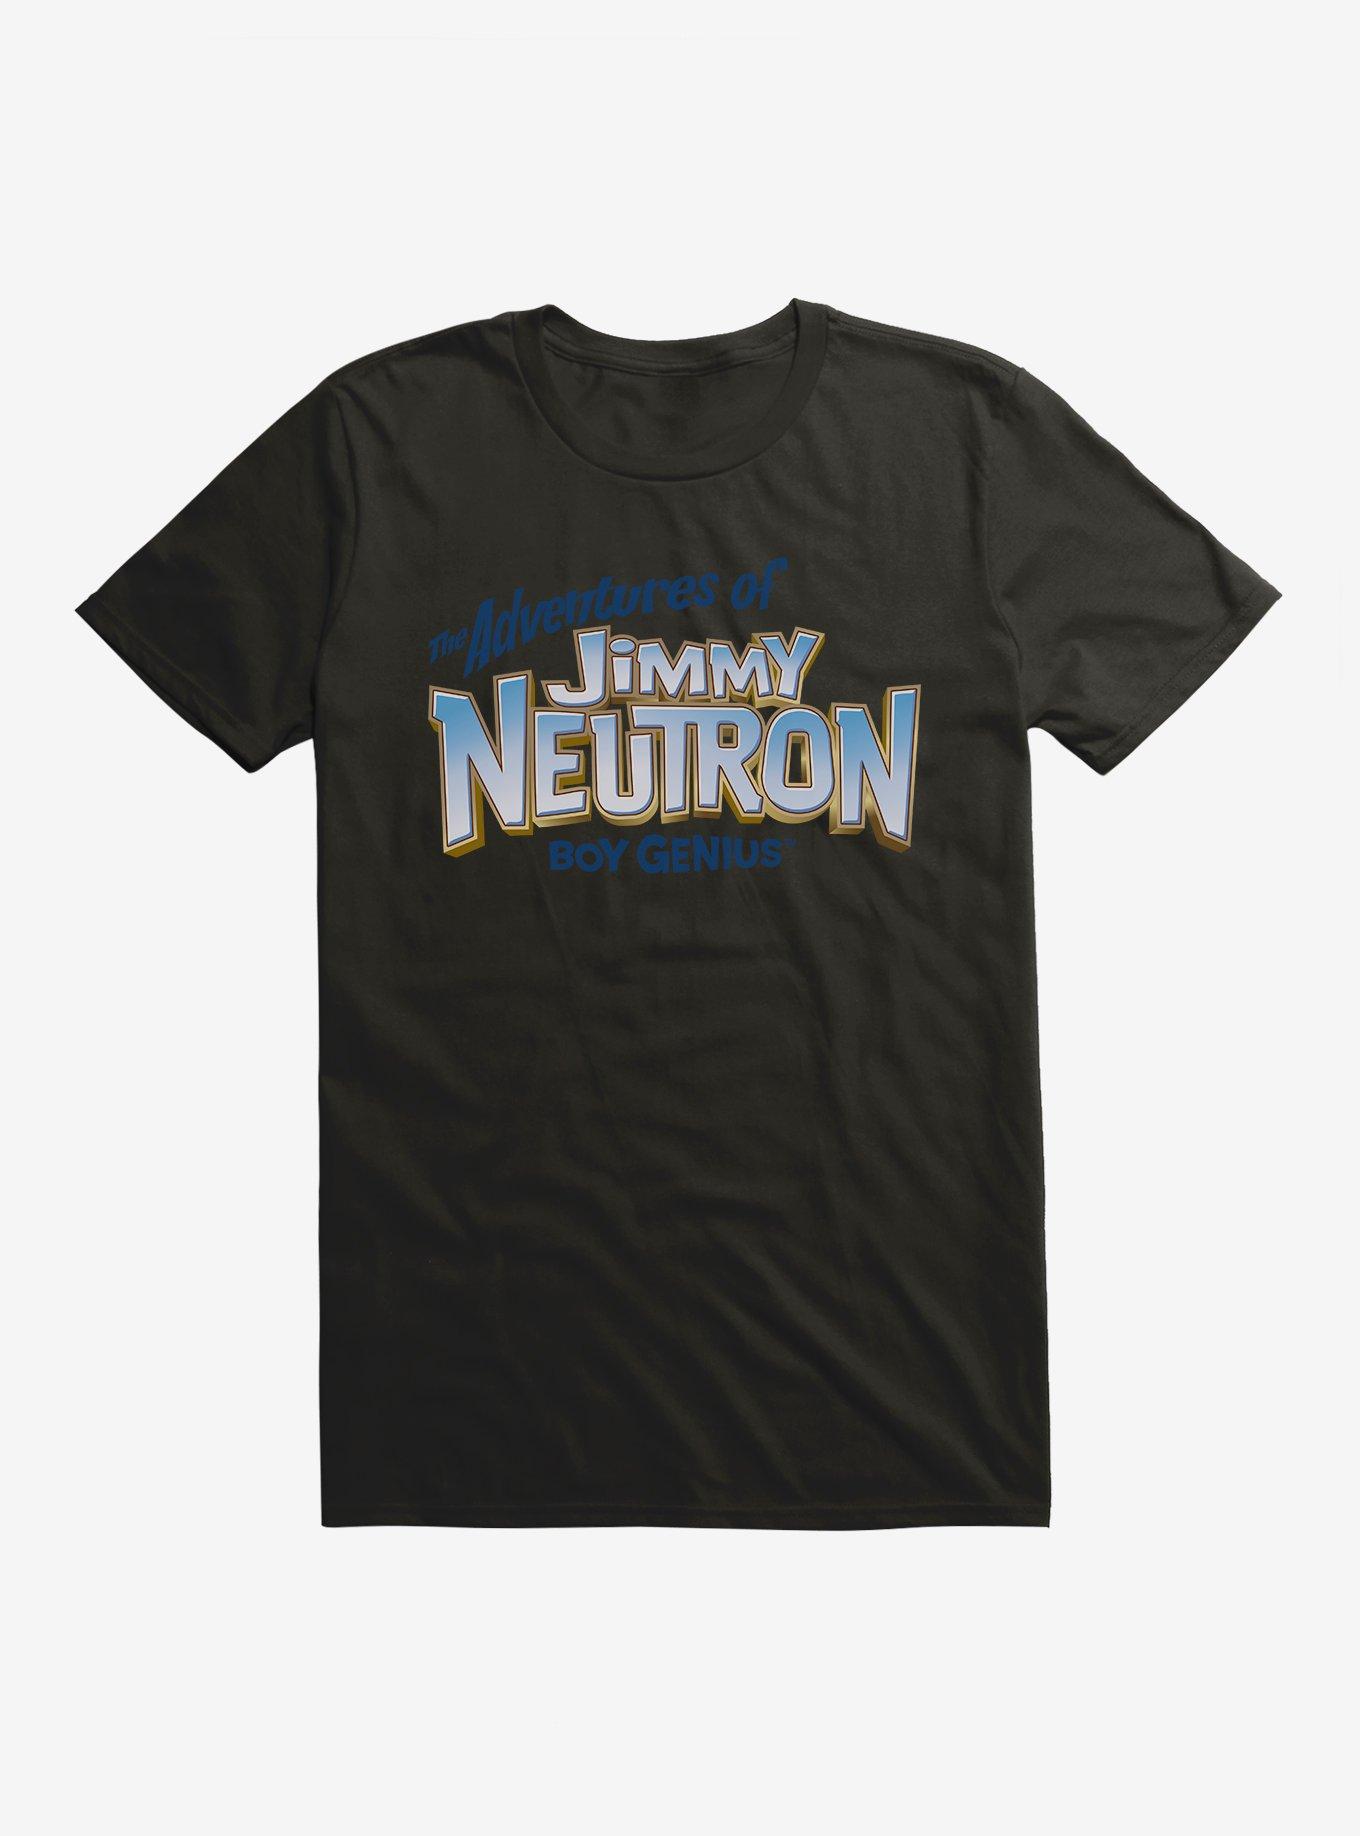 The Adventures Of Jimmy Neutron Boy Genius Title Logo T-Shirt